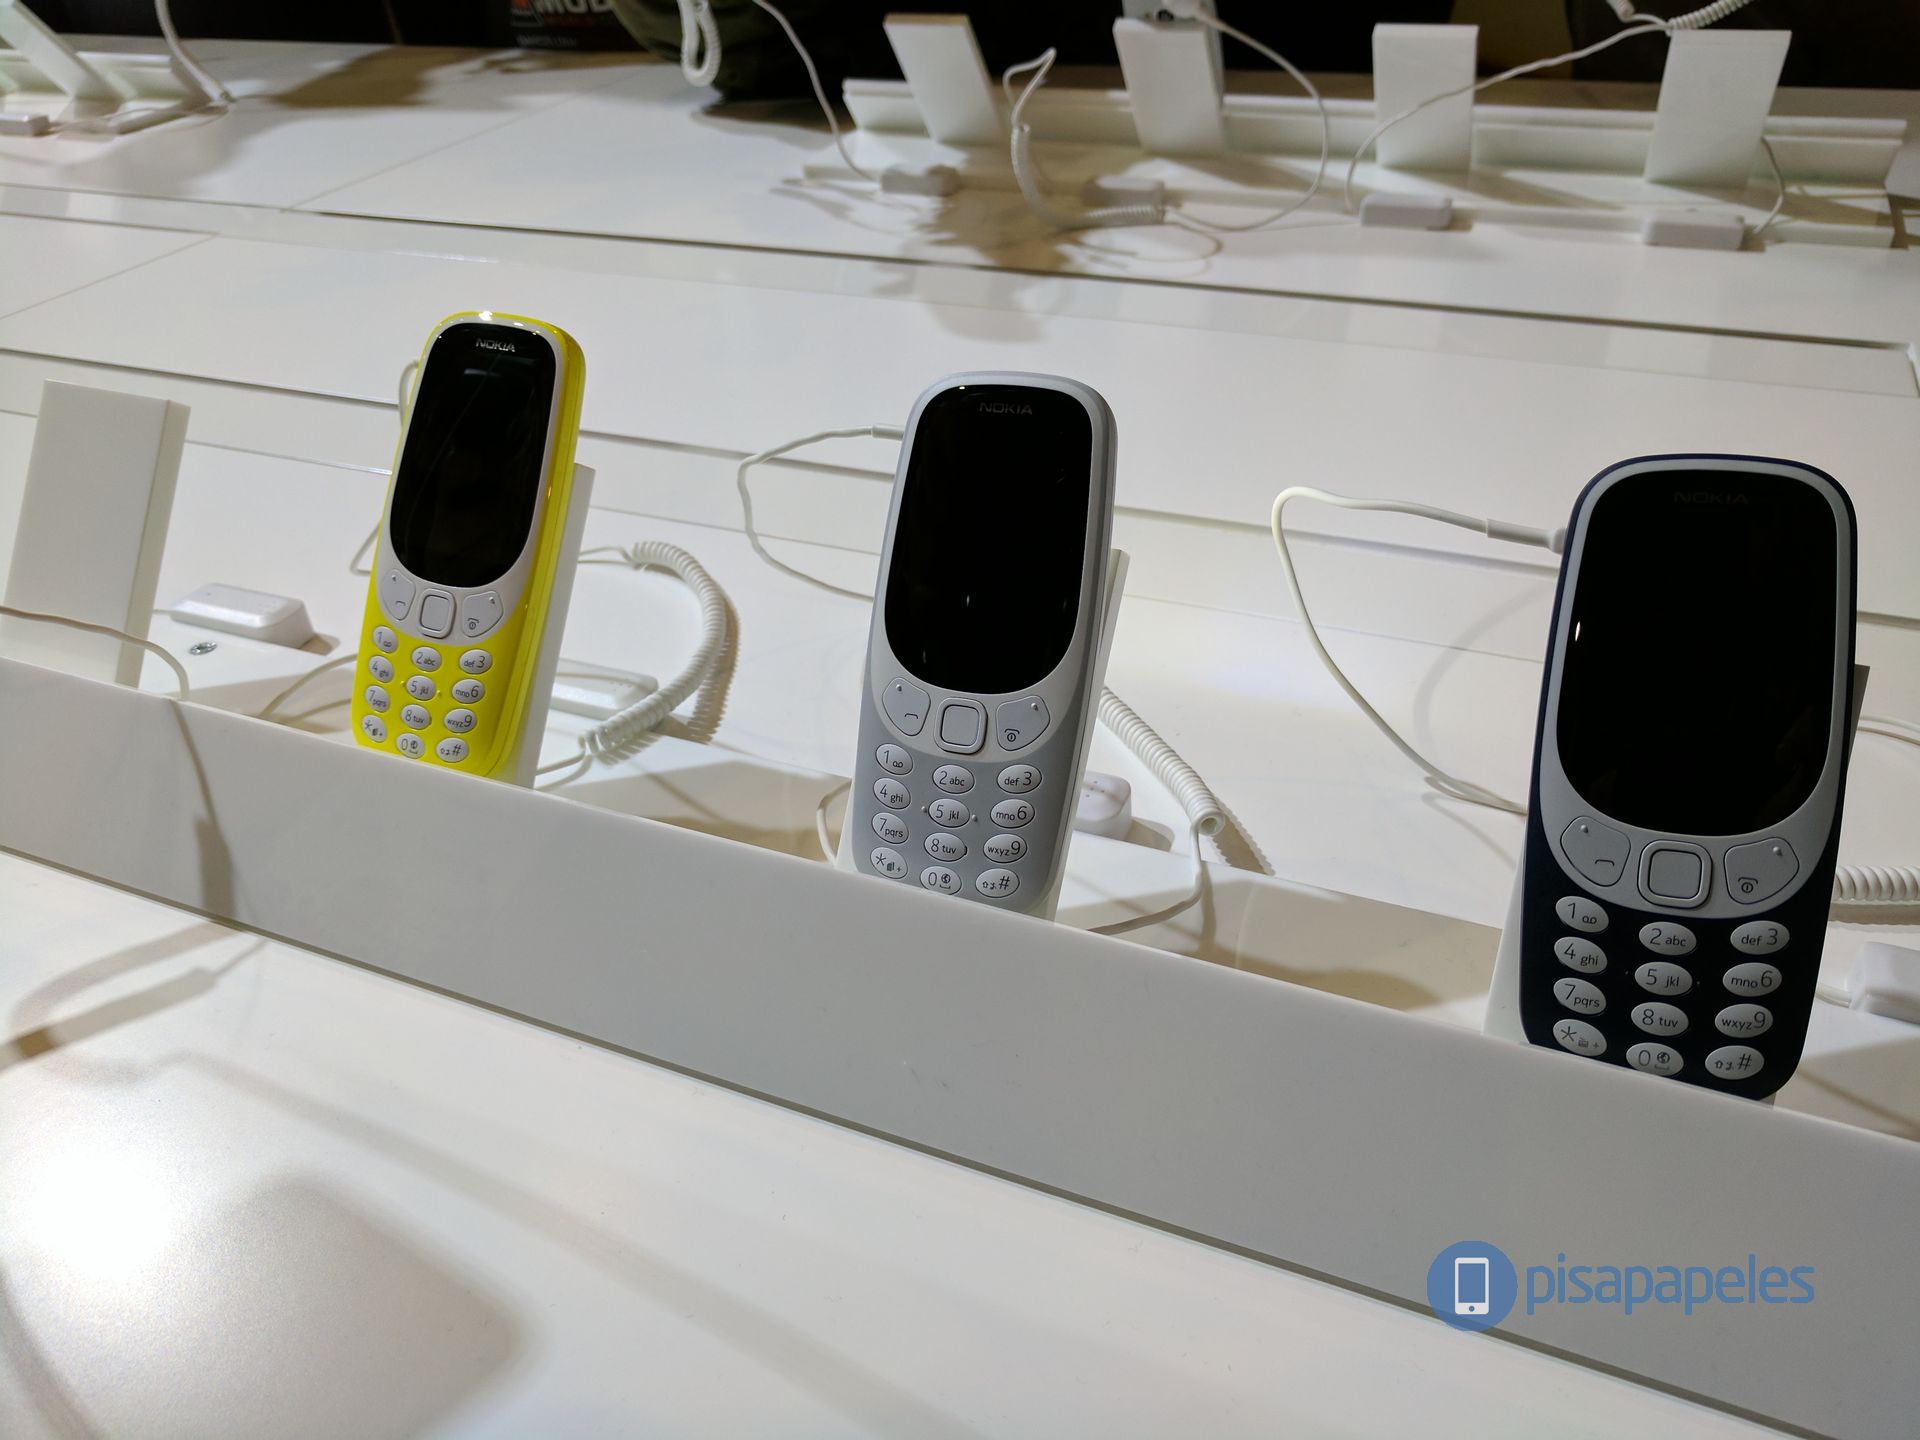 Kesan pertama Nokia 3310 # MWC17